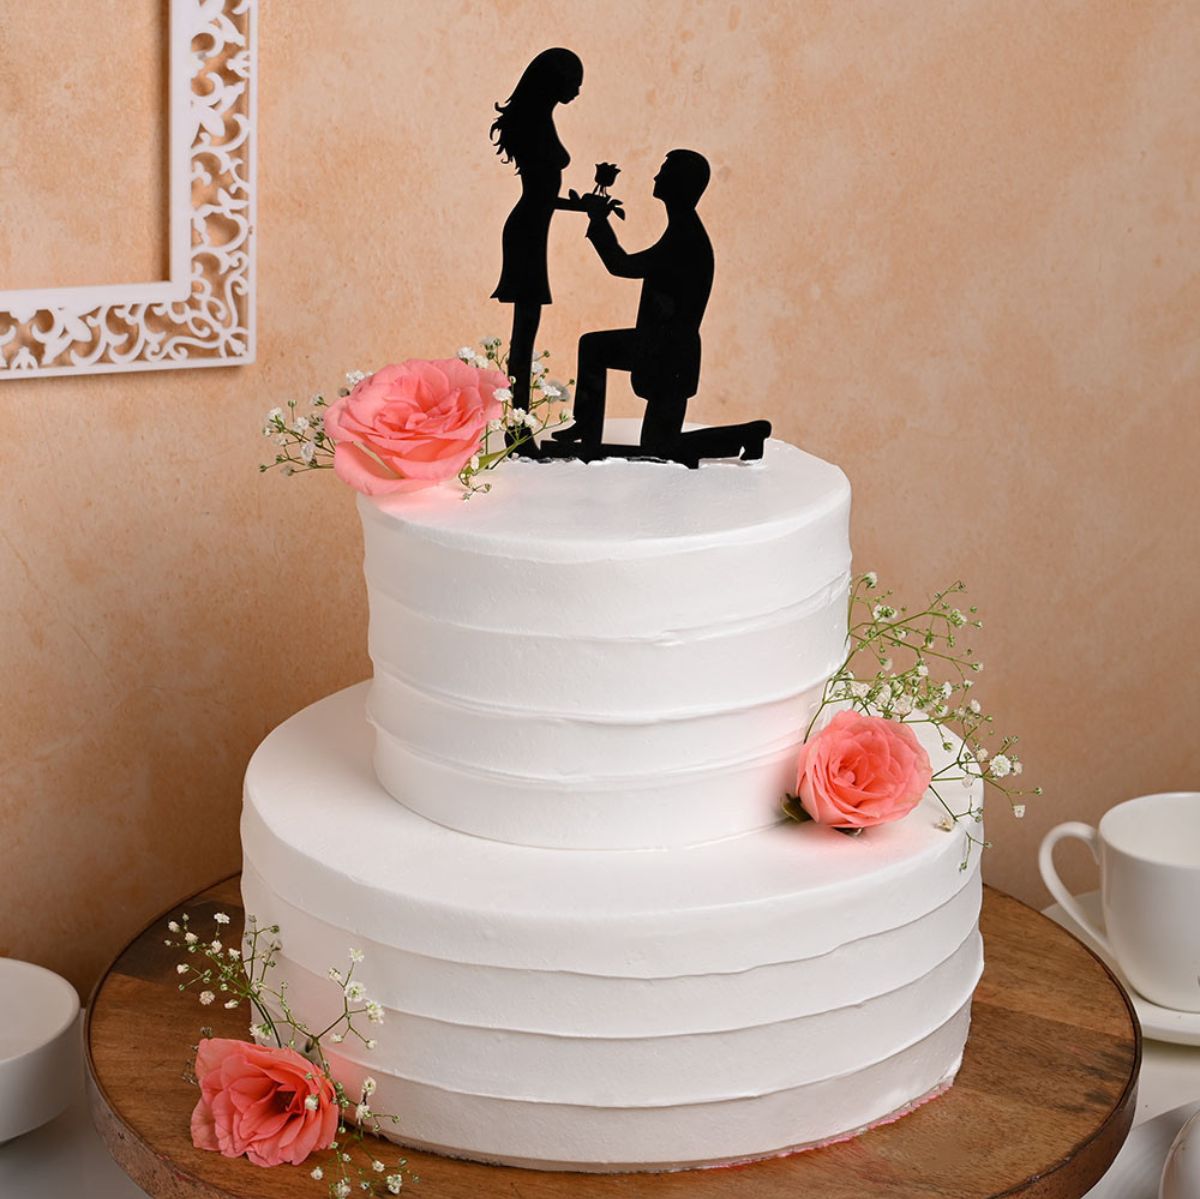 Bride And Groom Fondant Wedding Cake